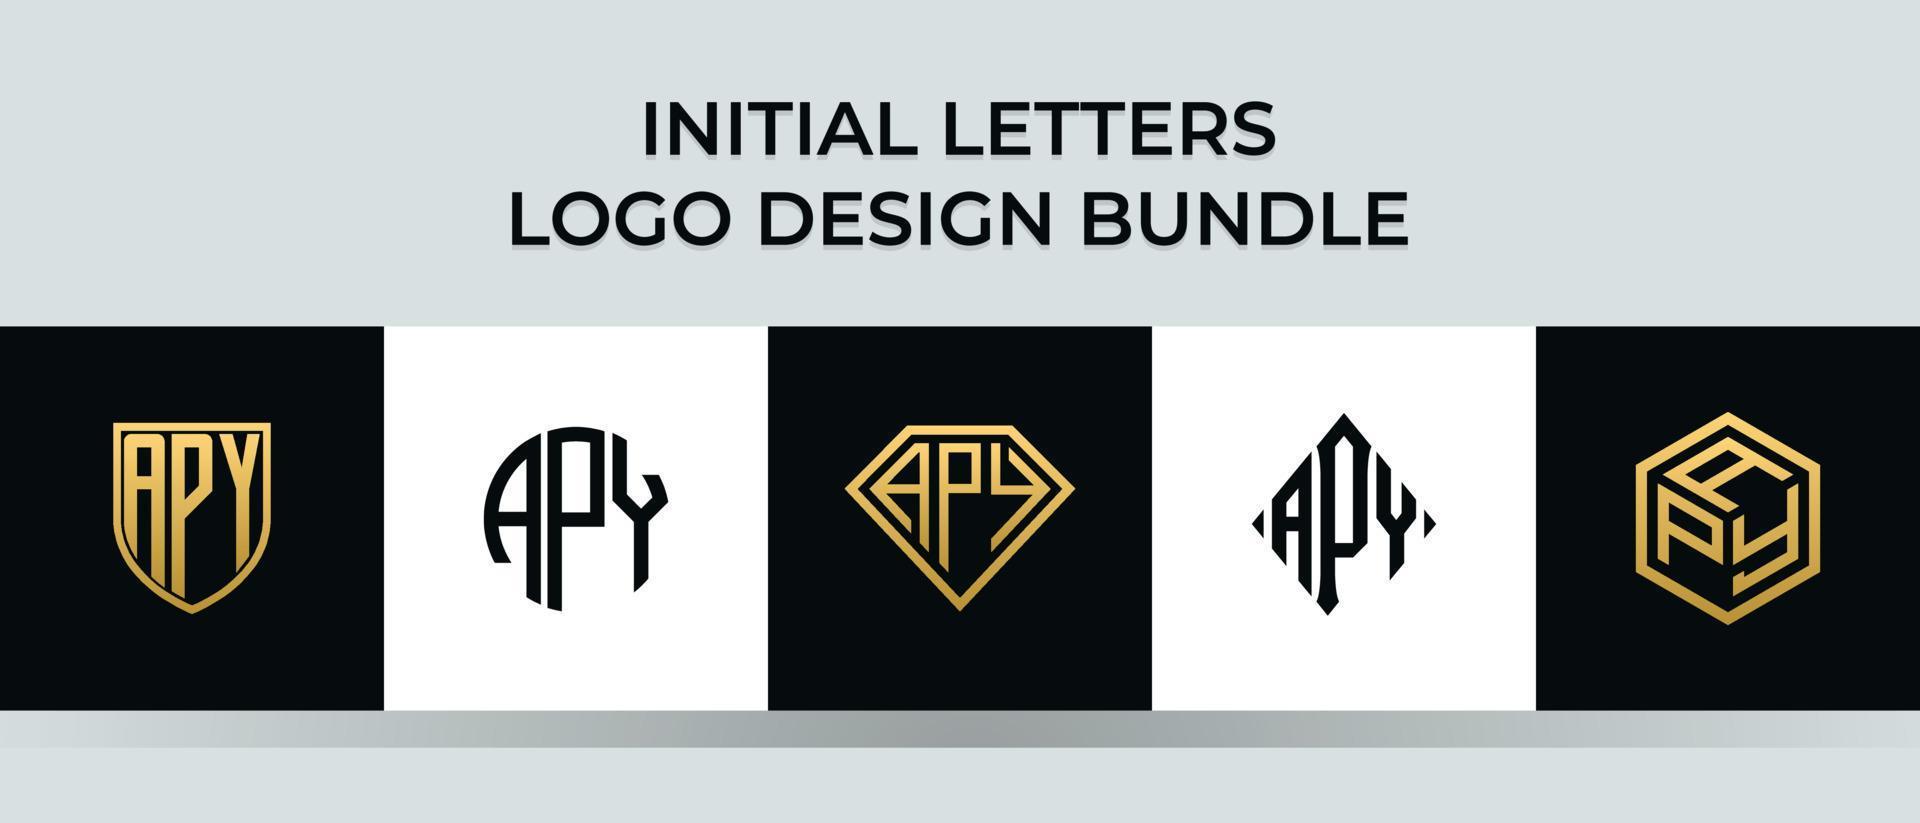 initiala bokstäver apy logotyp design bunt vektor